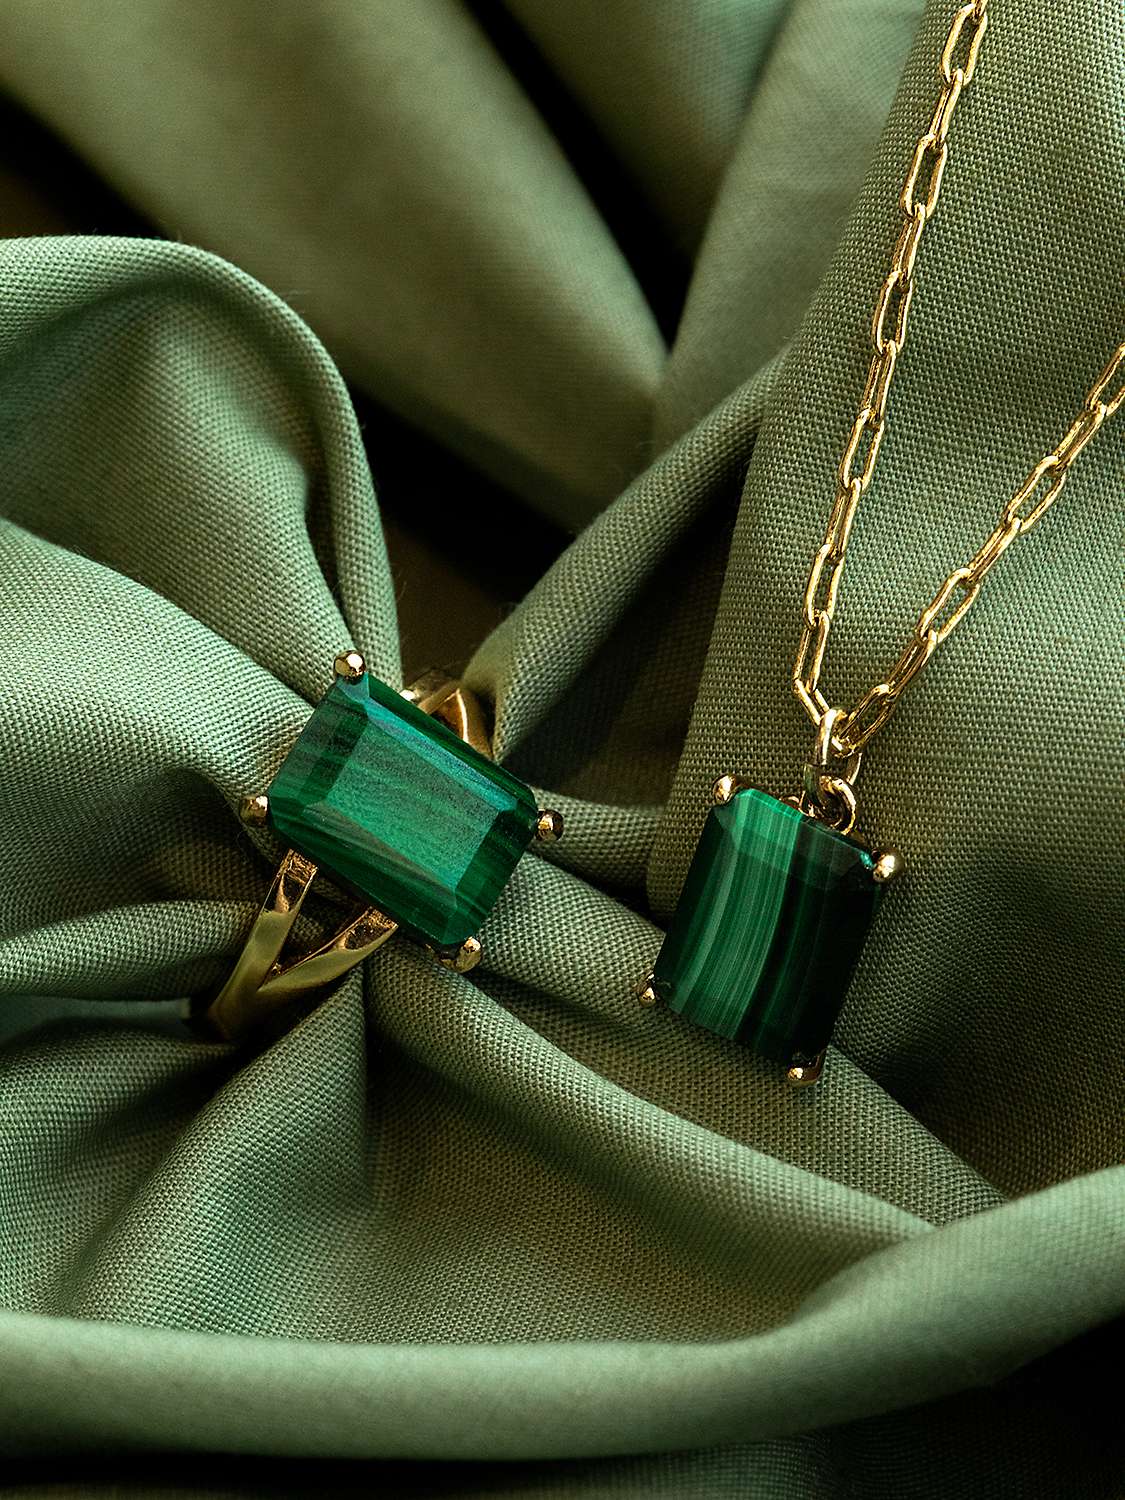 Buy Orelia Malachite Claw Set Pendant Necklace, Gold/Green Online at johnlewis.com